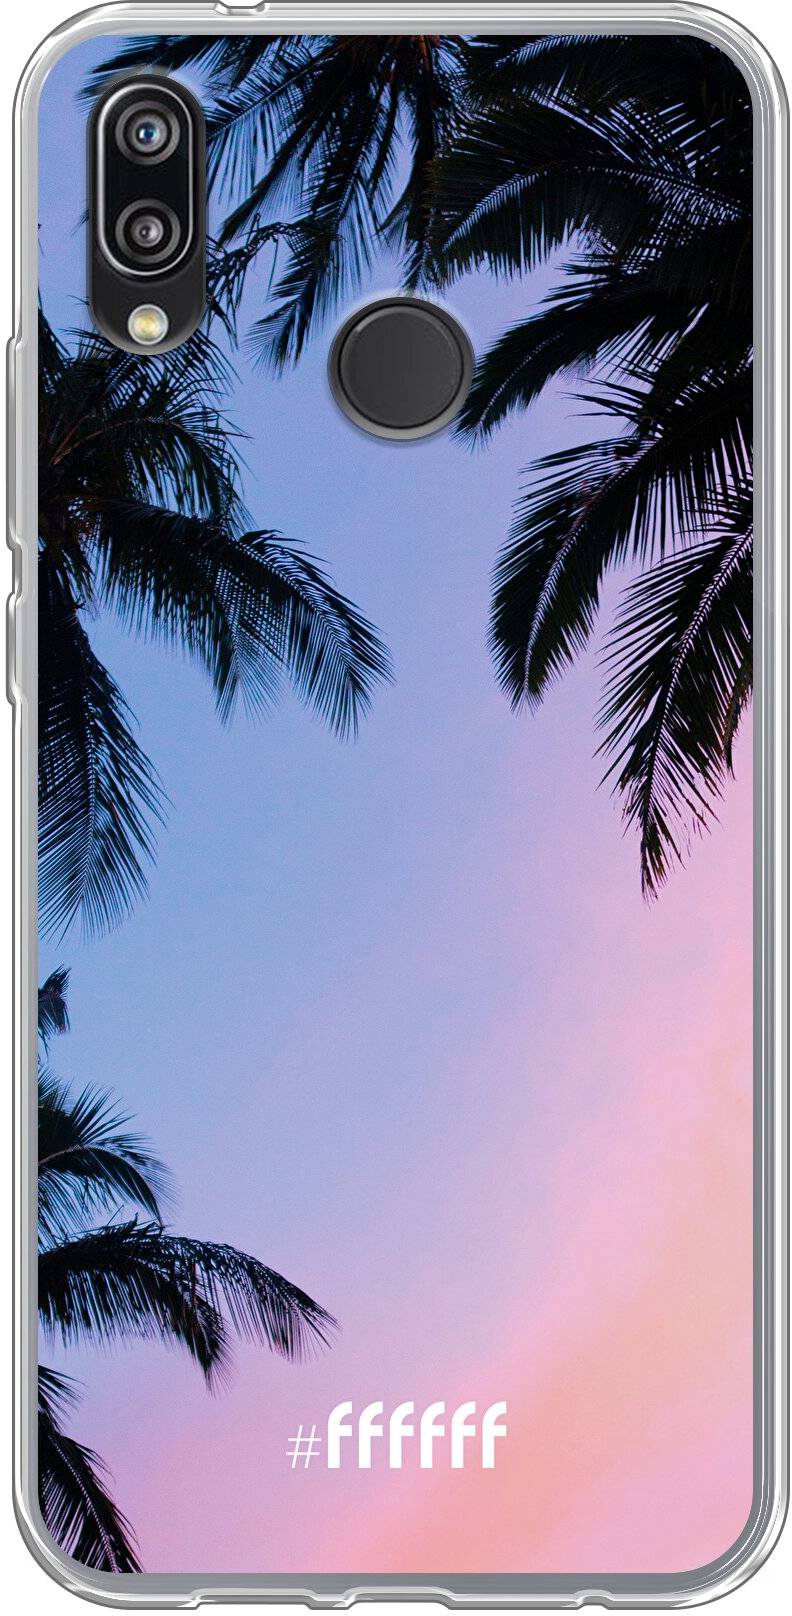 Sunset Palms P20 Lite (2018)